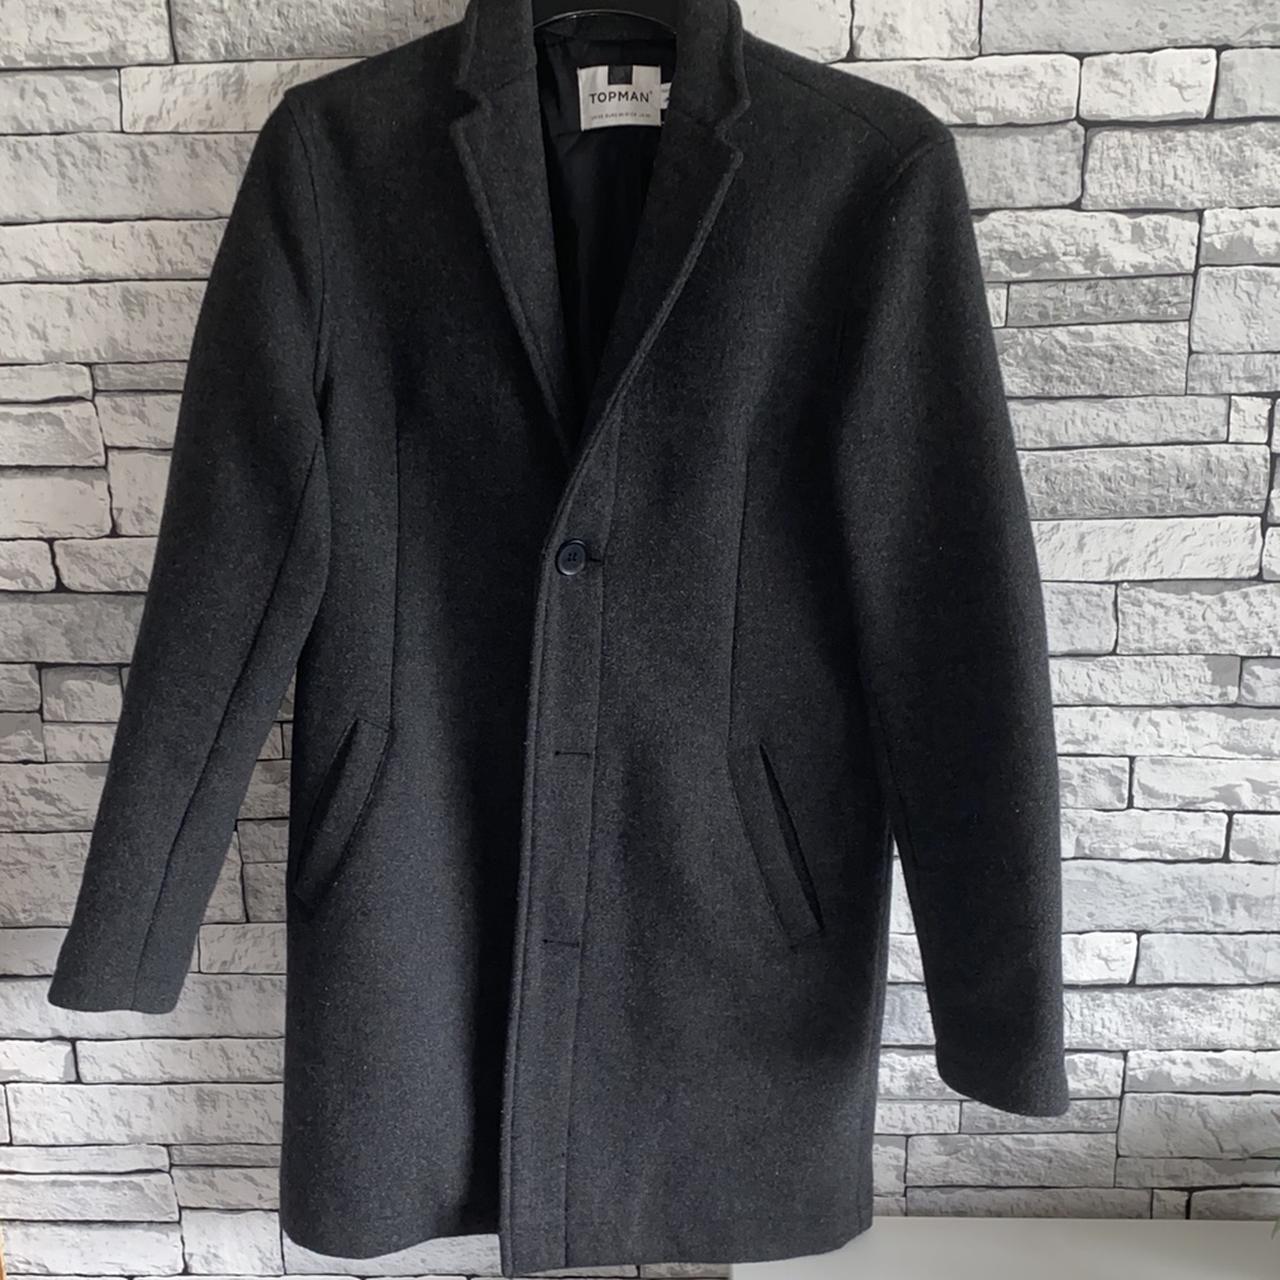 topman dark grey trench coat worn once or gekfe... - Depop